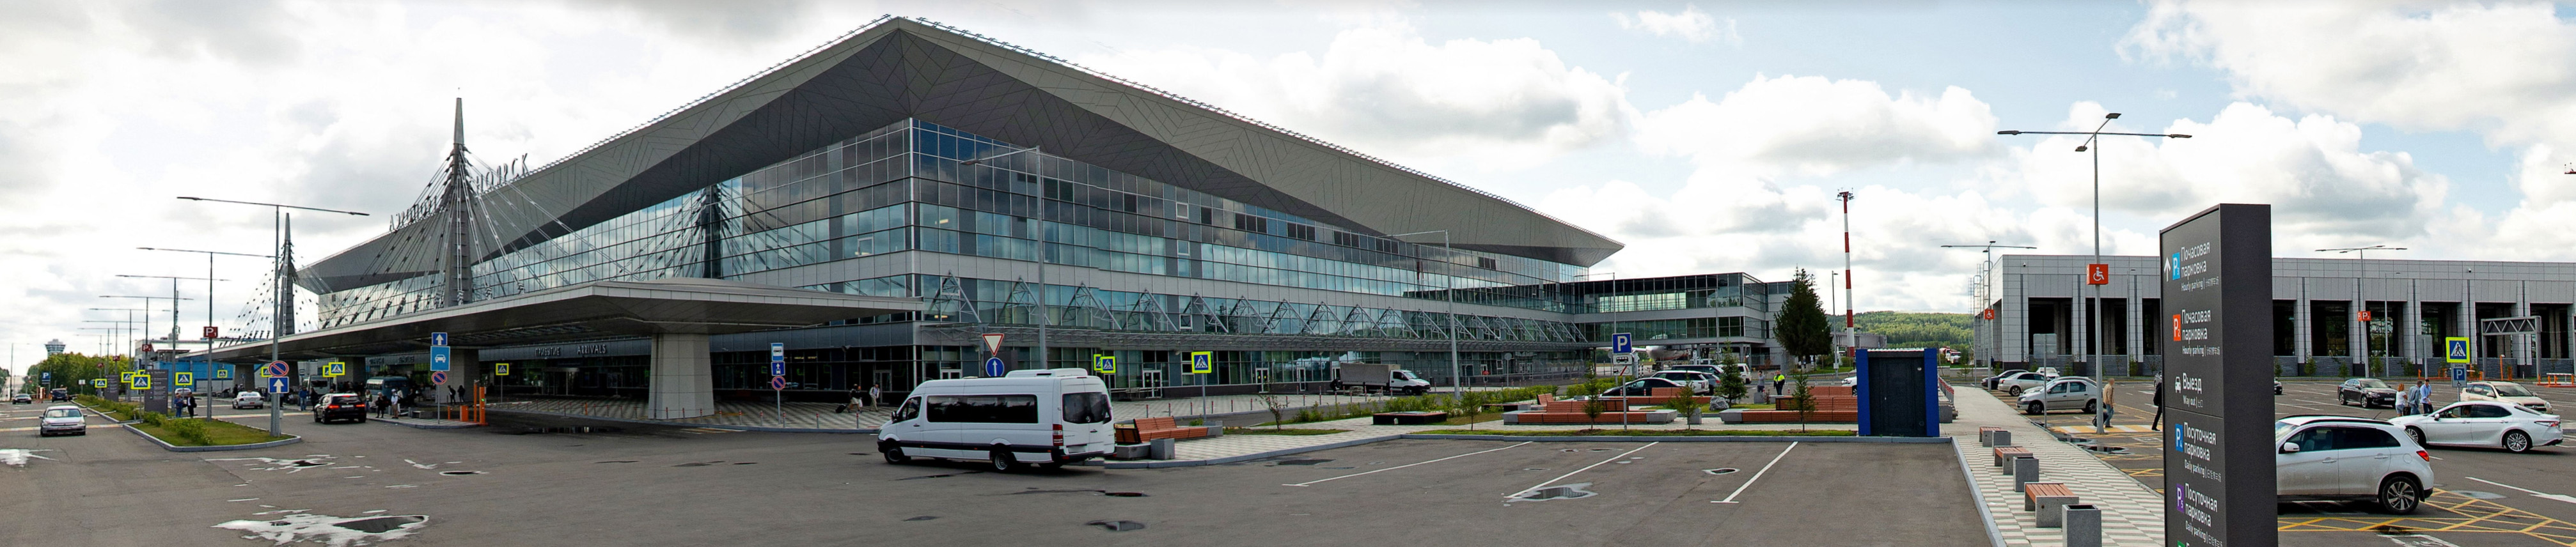 Аэропорт Красноярска  - благоустройство